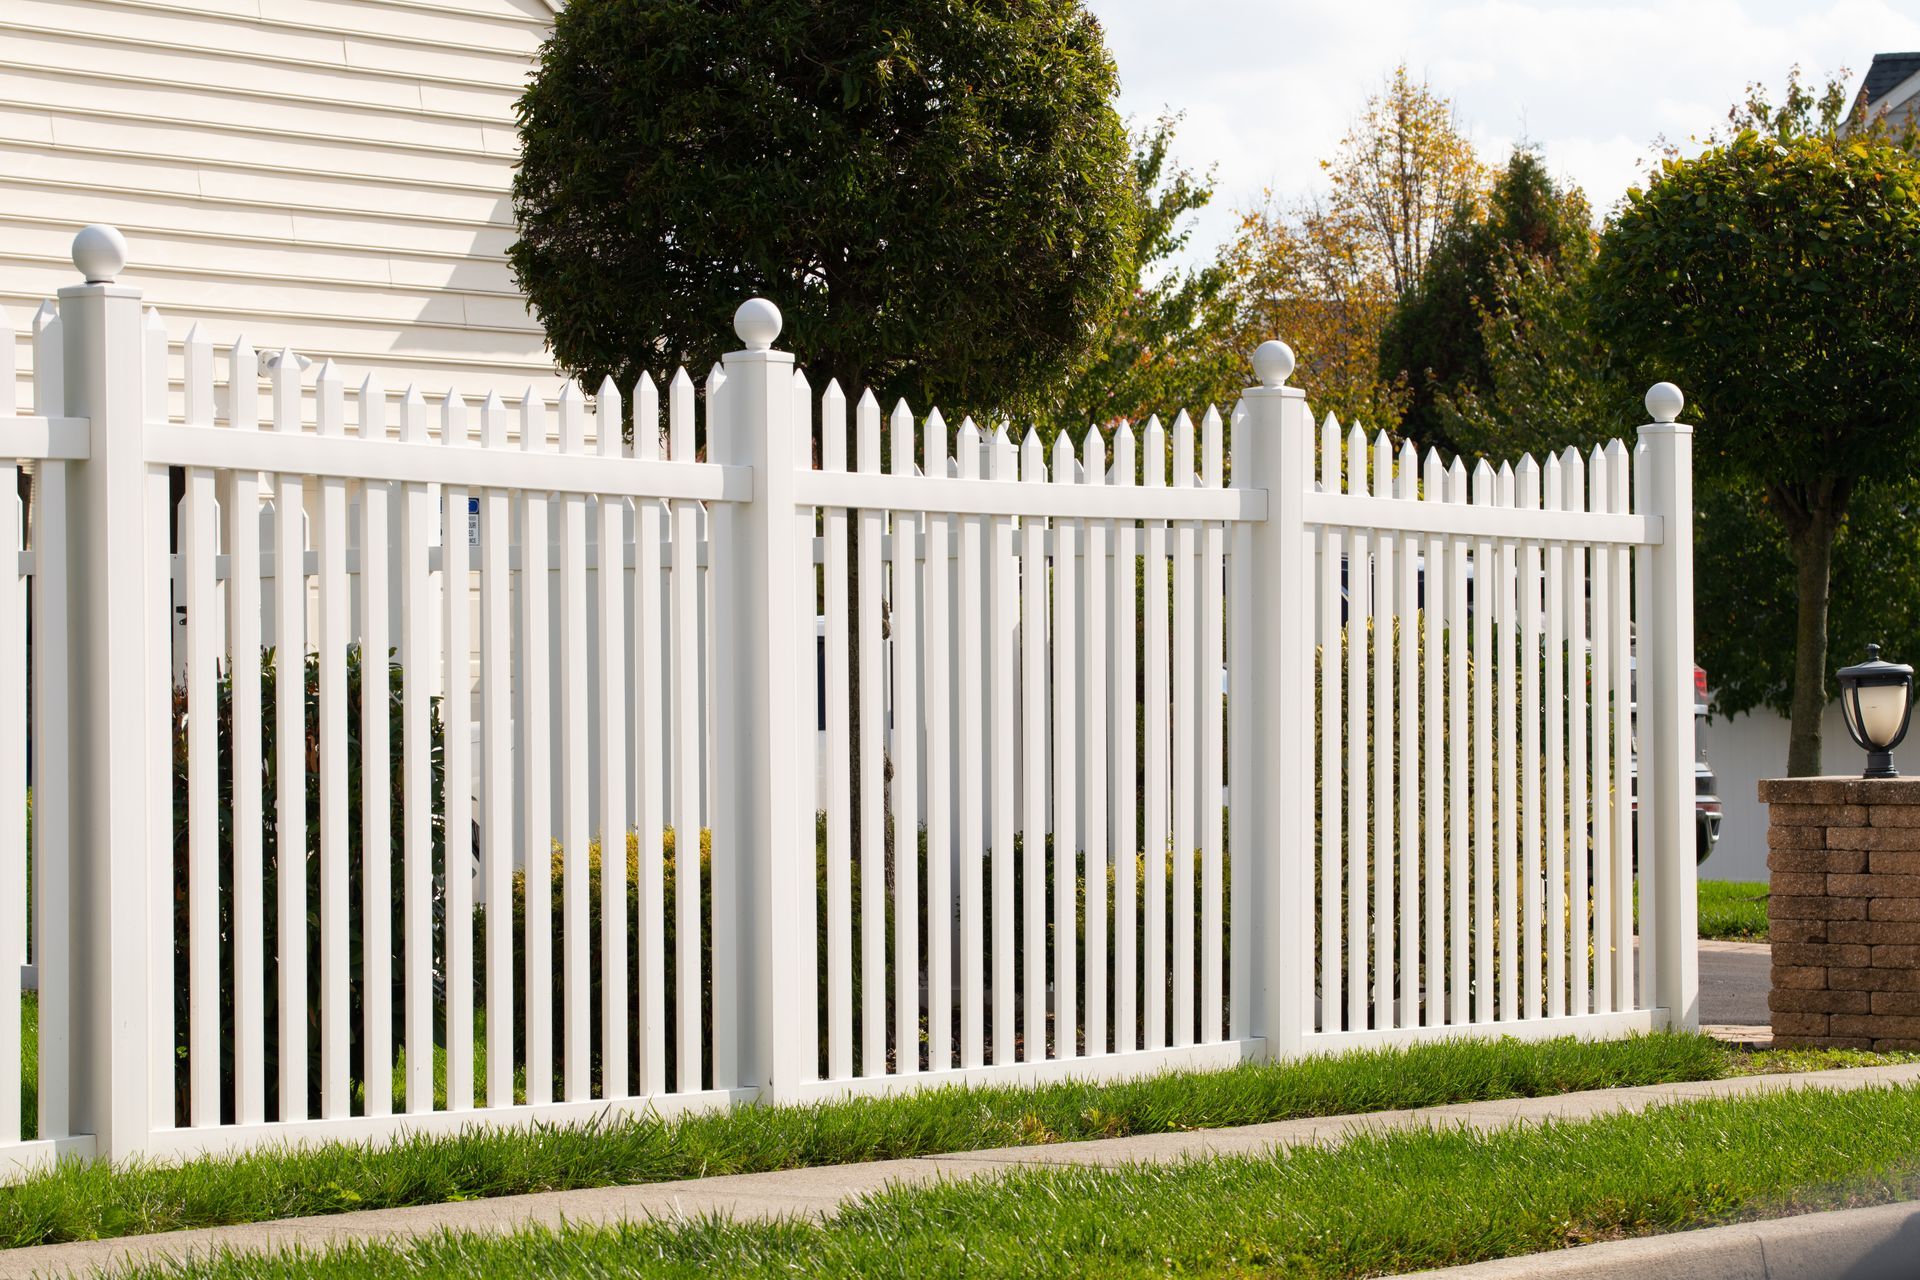 a white fence surrounds a lush green yard